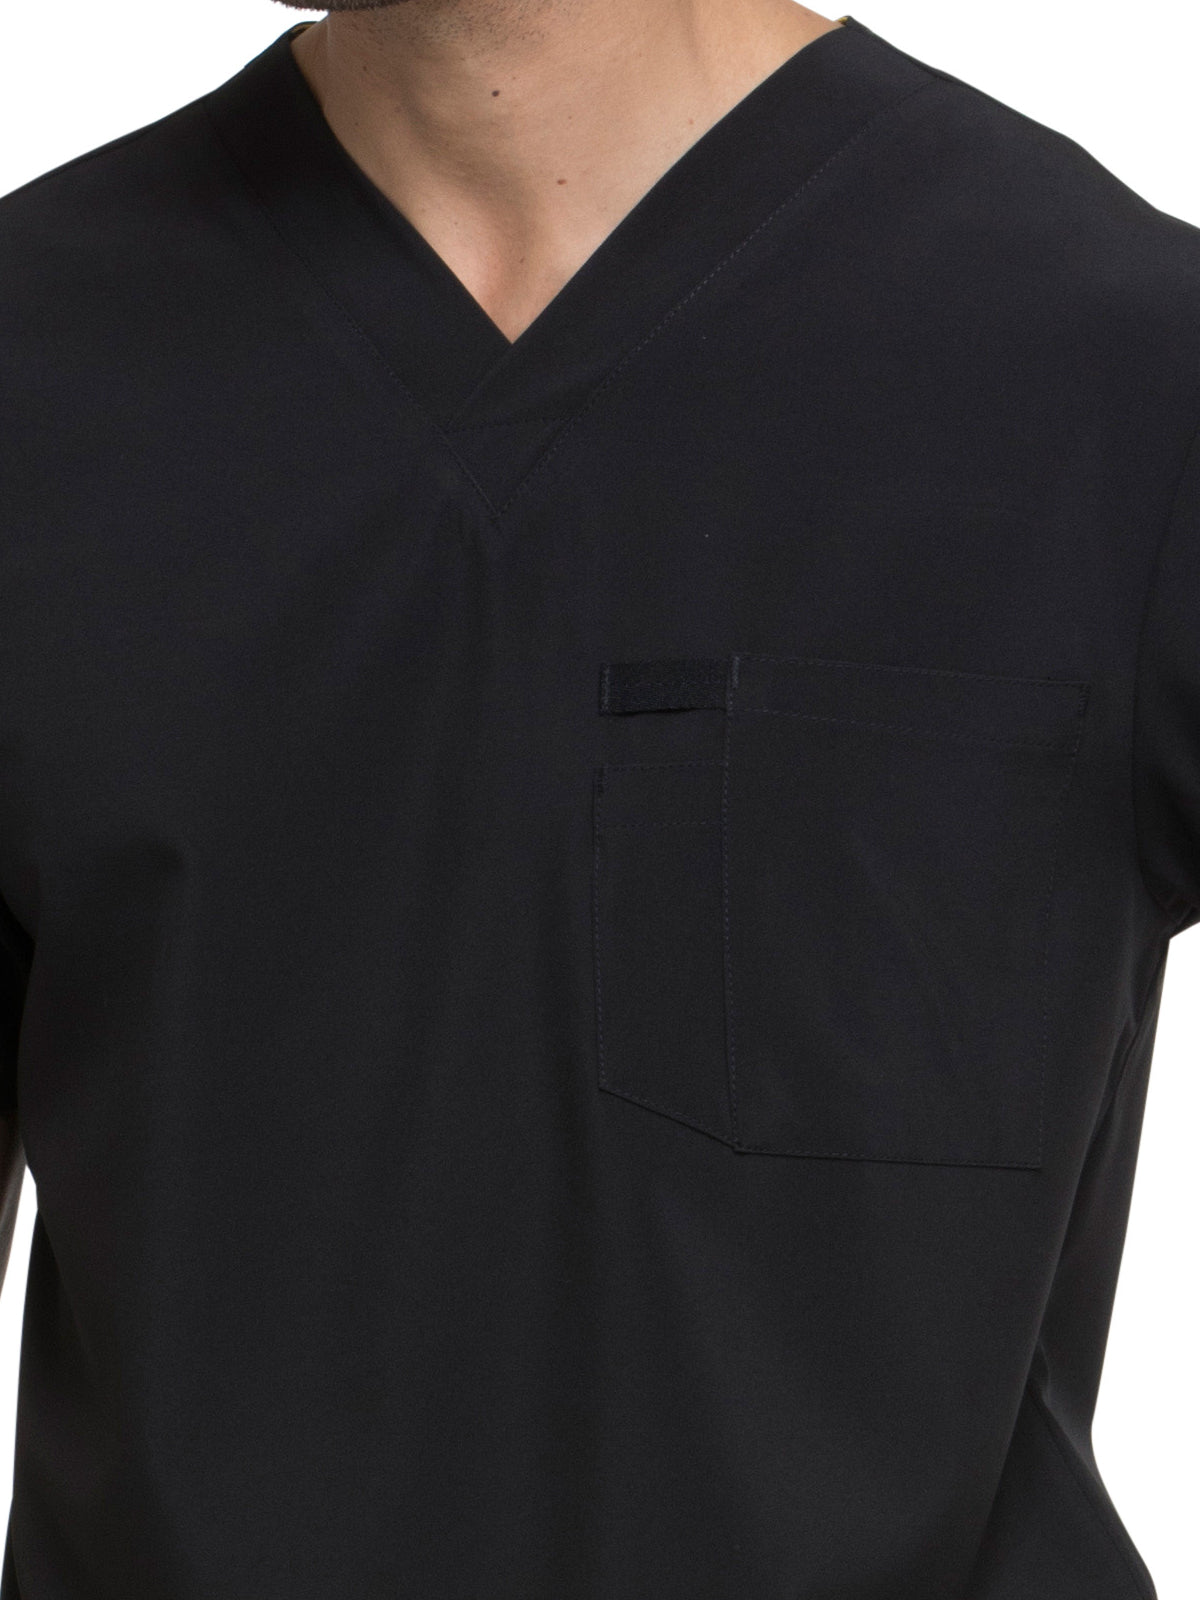 Men's 1-Pocket Tuckable V-Neck Scrub Top - DK635 - Black